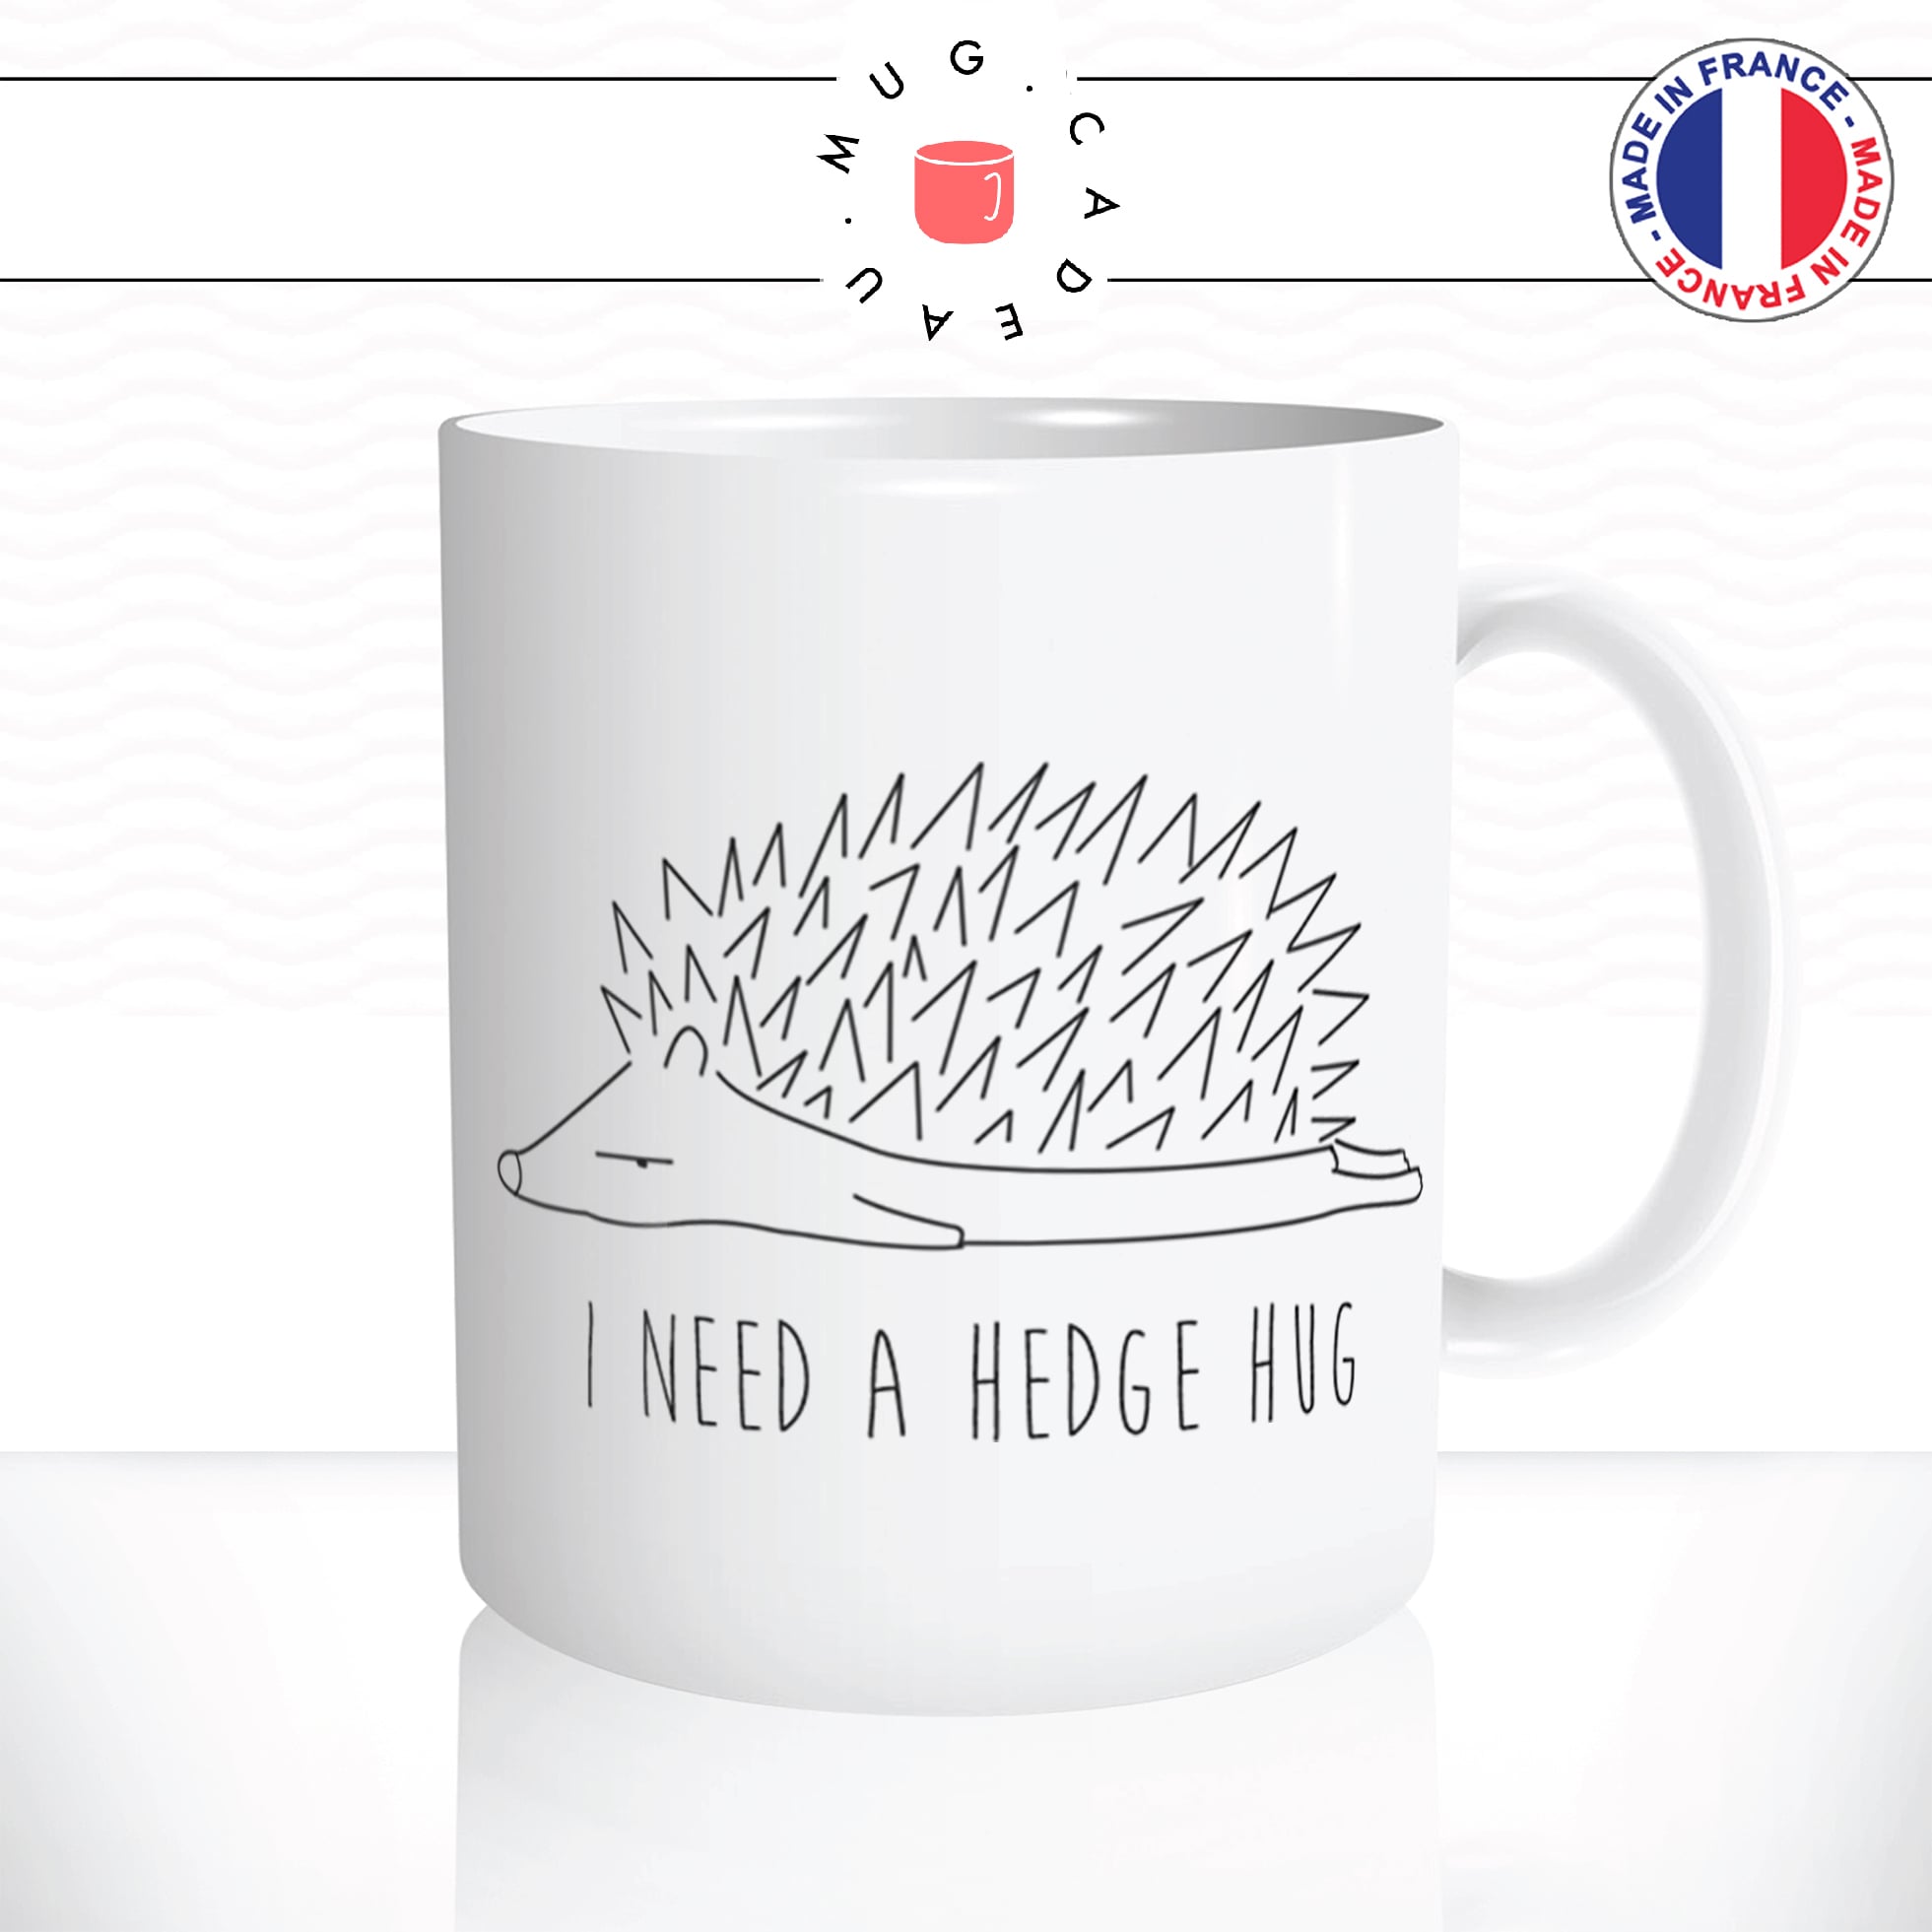 mug-tasse-ref1-herisson-pics-hedge-hugg-cafe-the-mugs-asses-personnalise-anse-droite-min